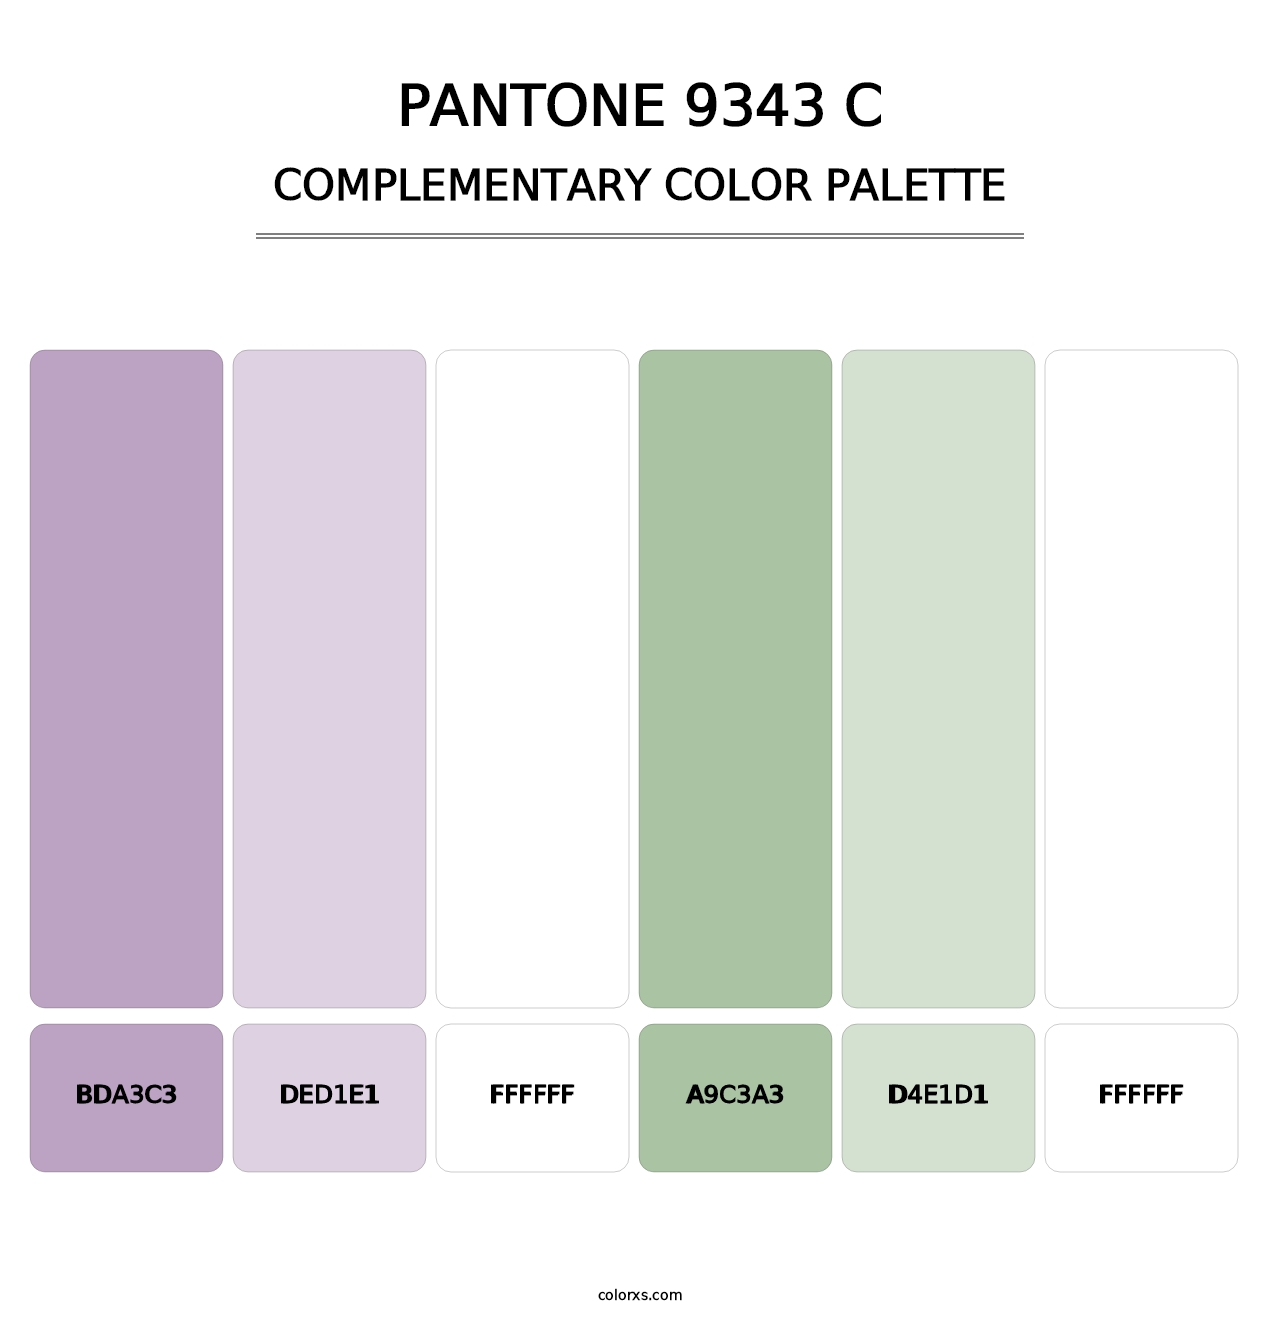 PANTONE 9343 C - Complementary Color Palette